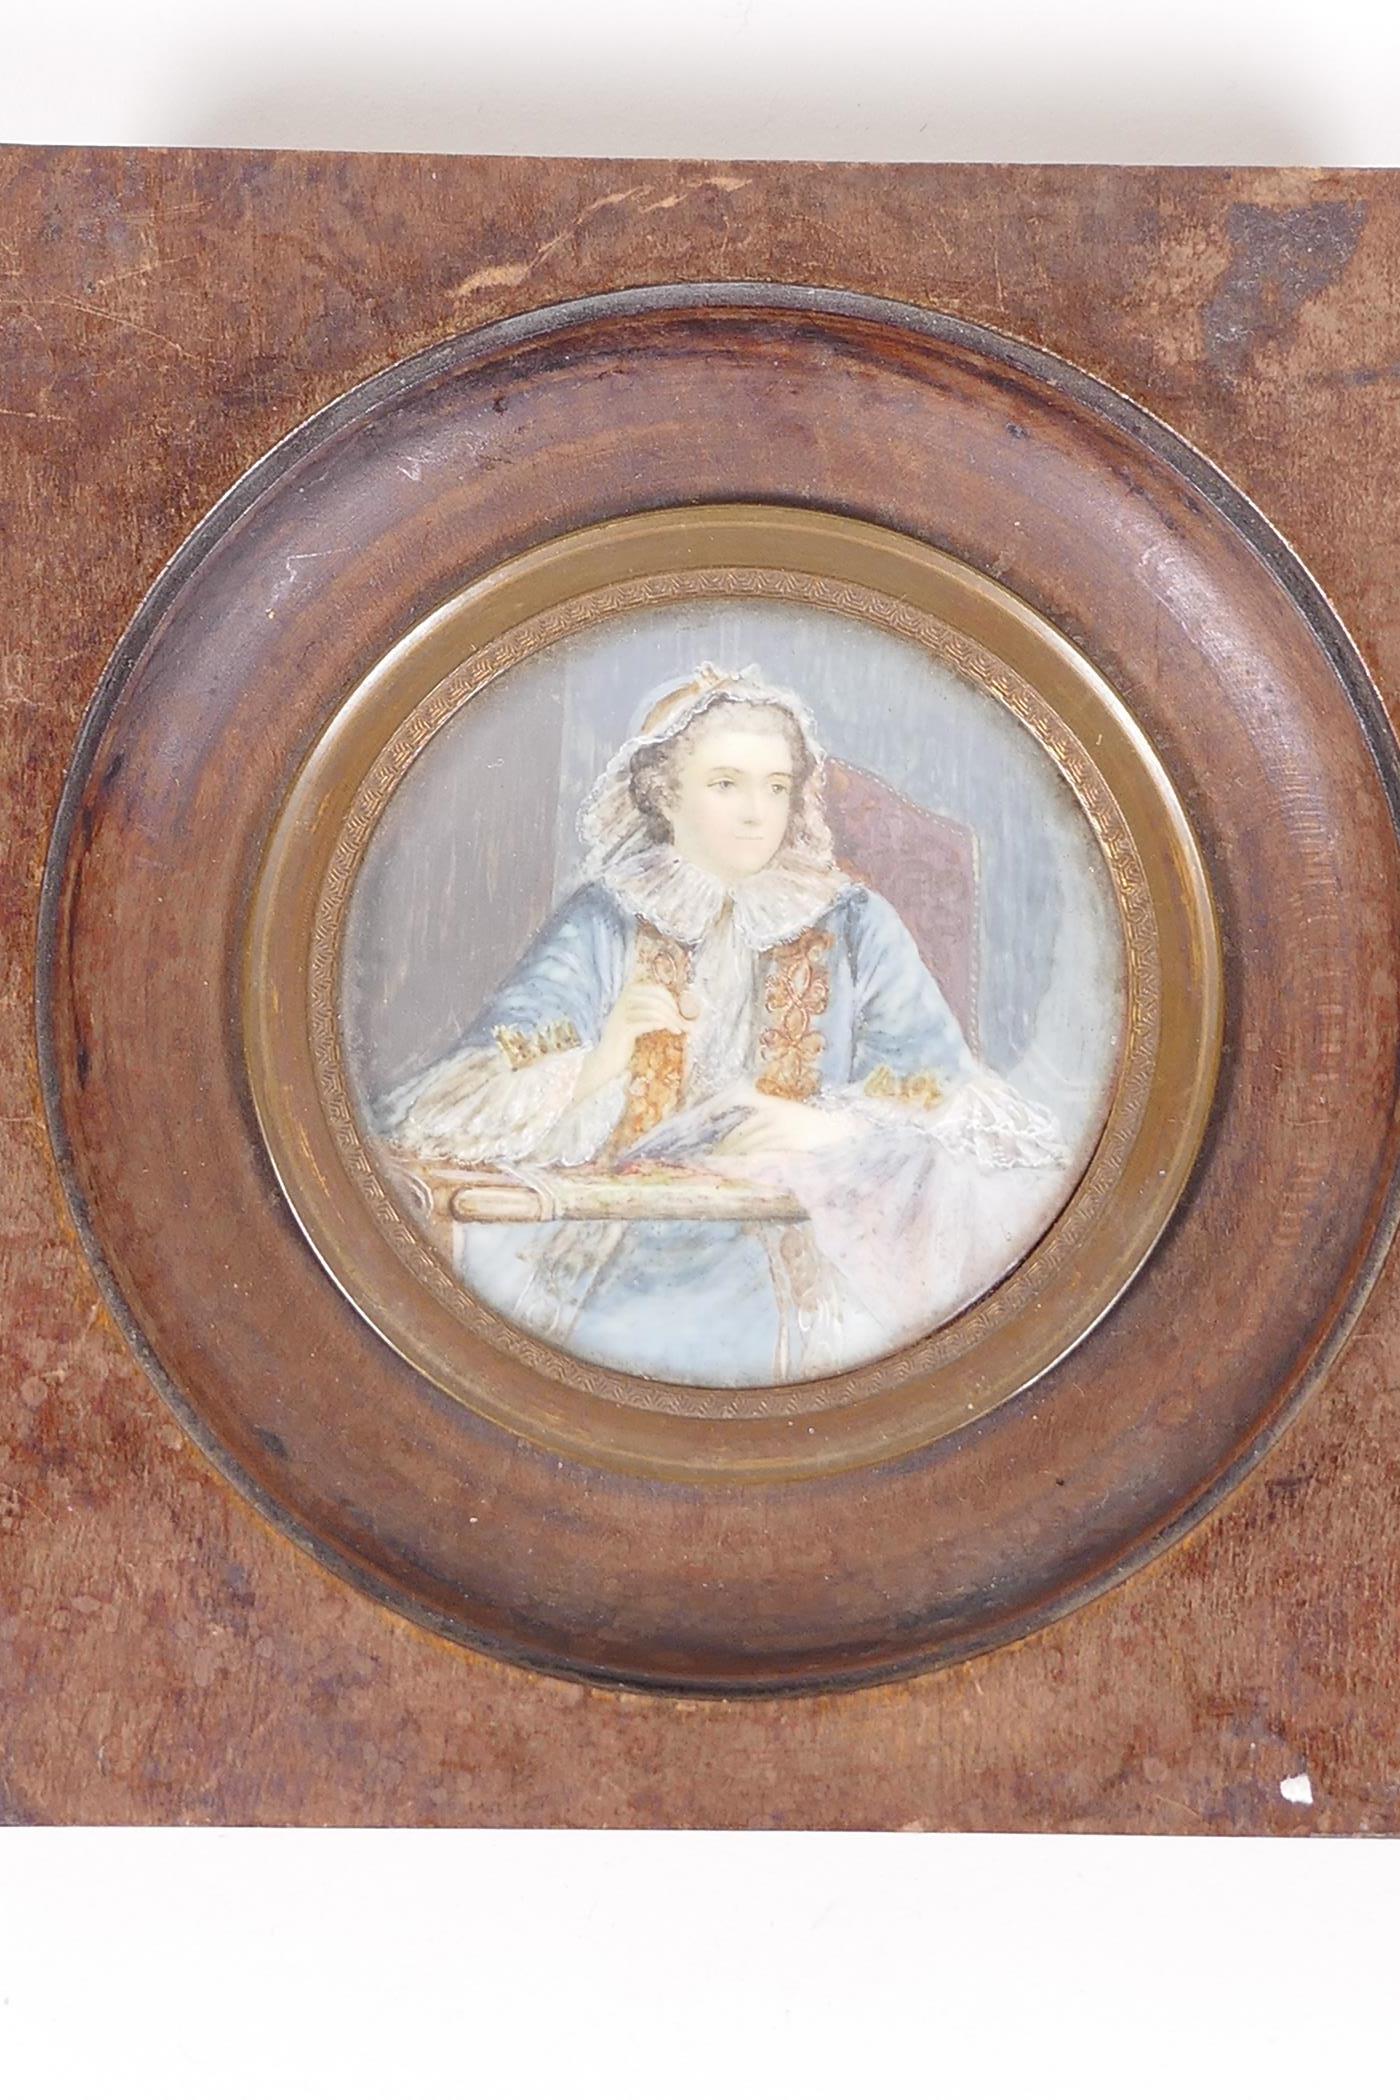 A C19th miniature portrait of a lace maker in elaborate dress, 2½" diameter - Image 2 of 3